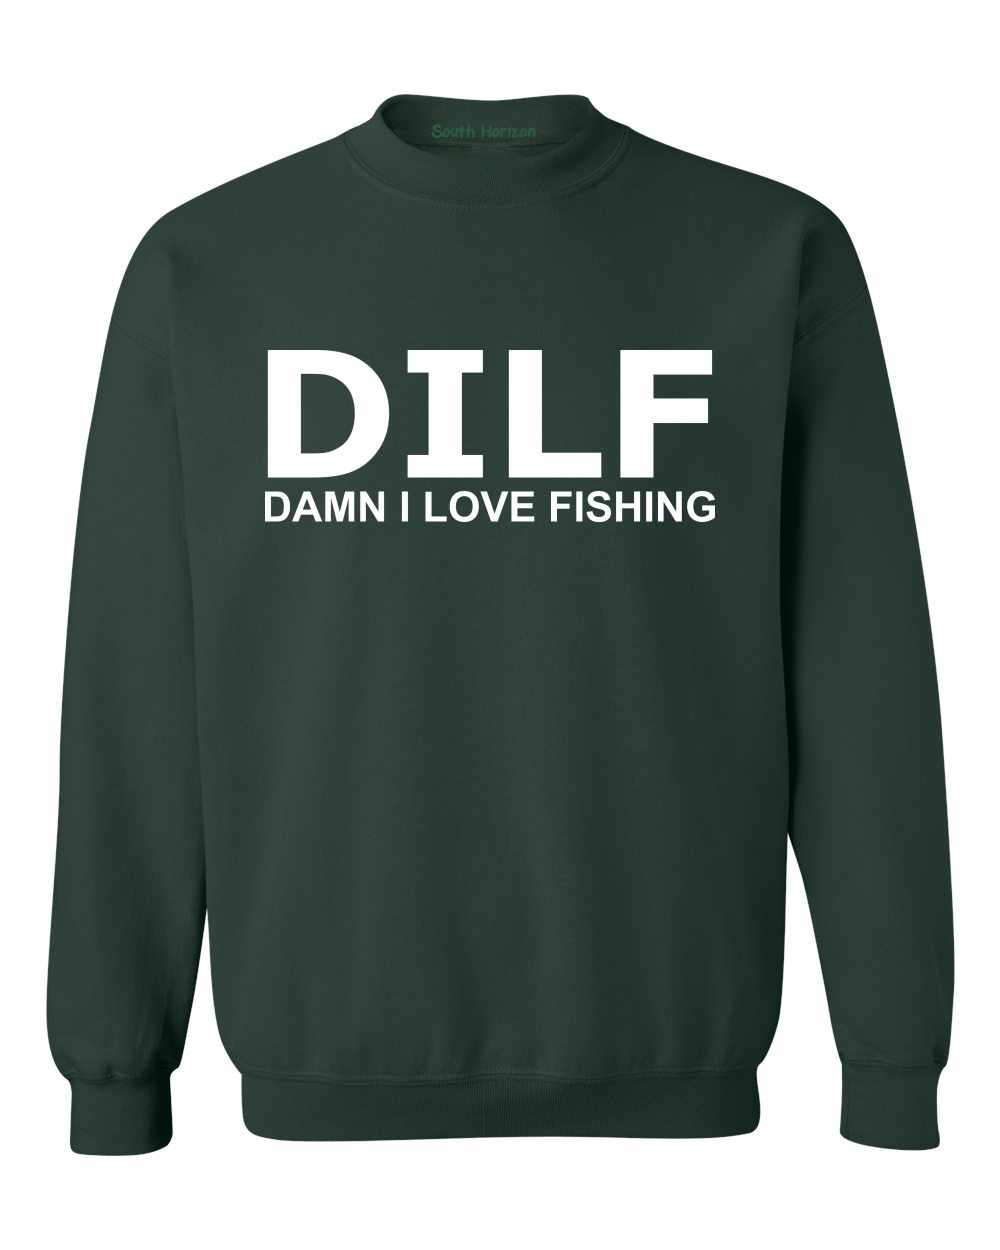 Dilf Damn I Love Fishing On Sweatshirt in 9 Colors, Maroon / Small